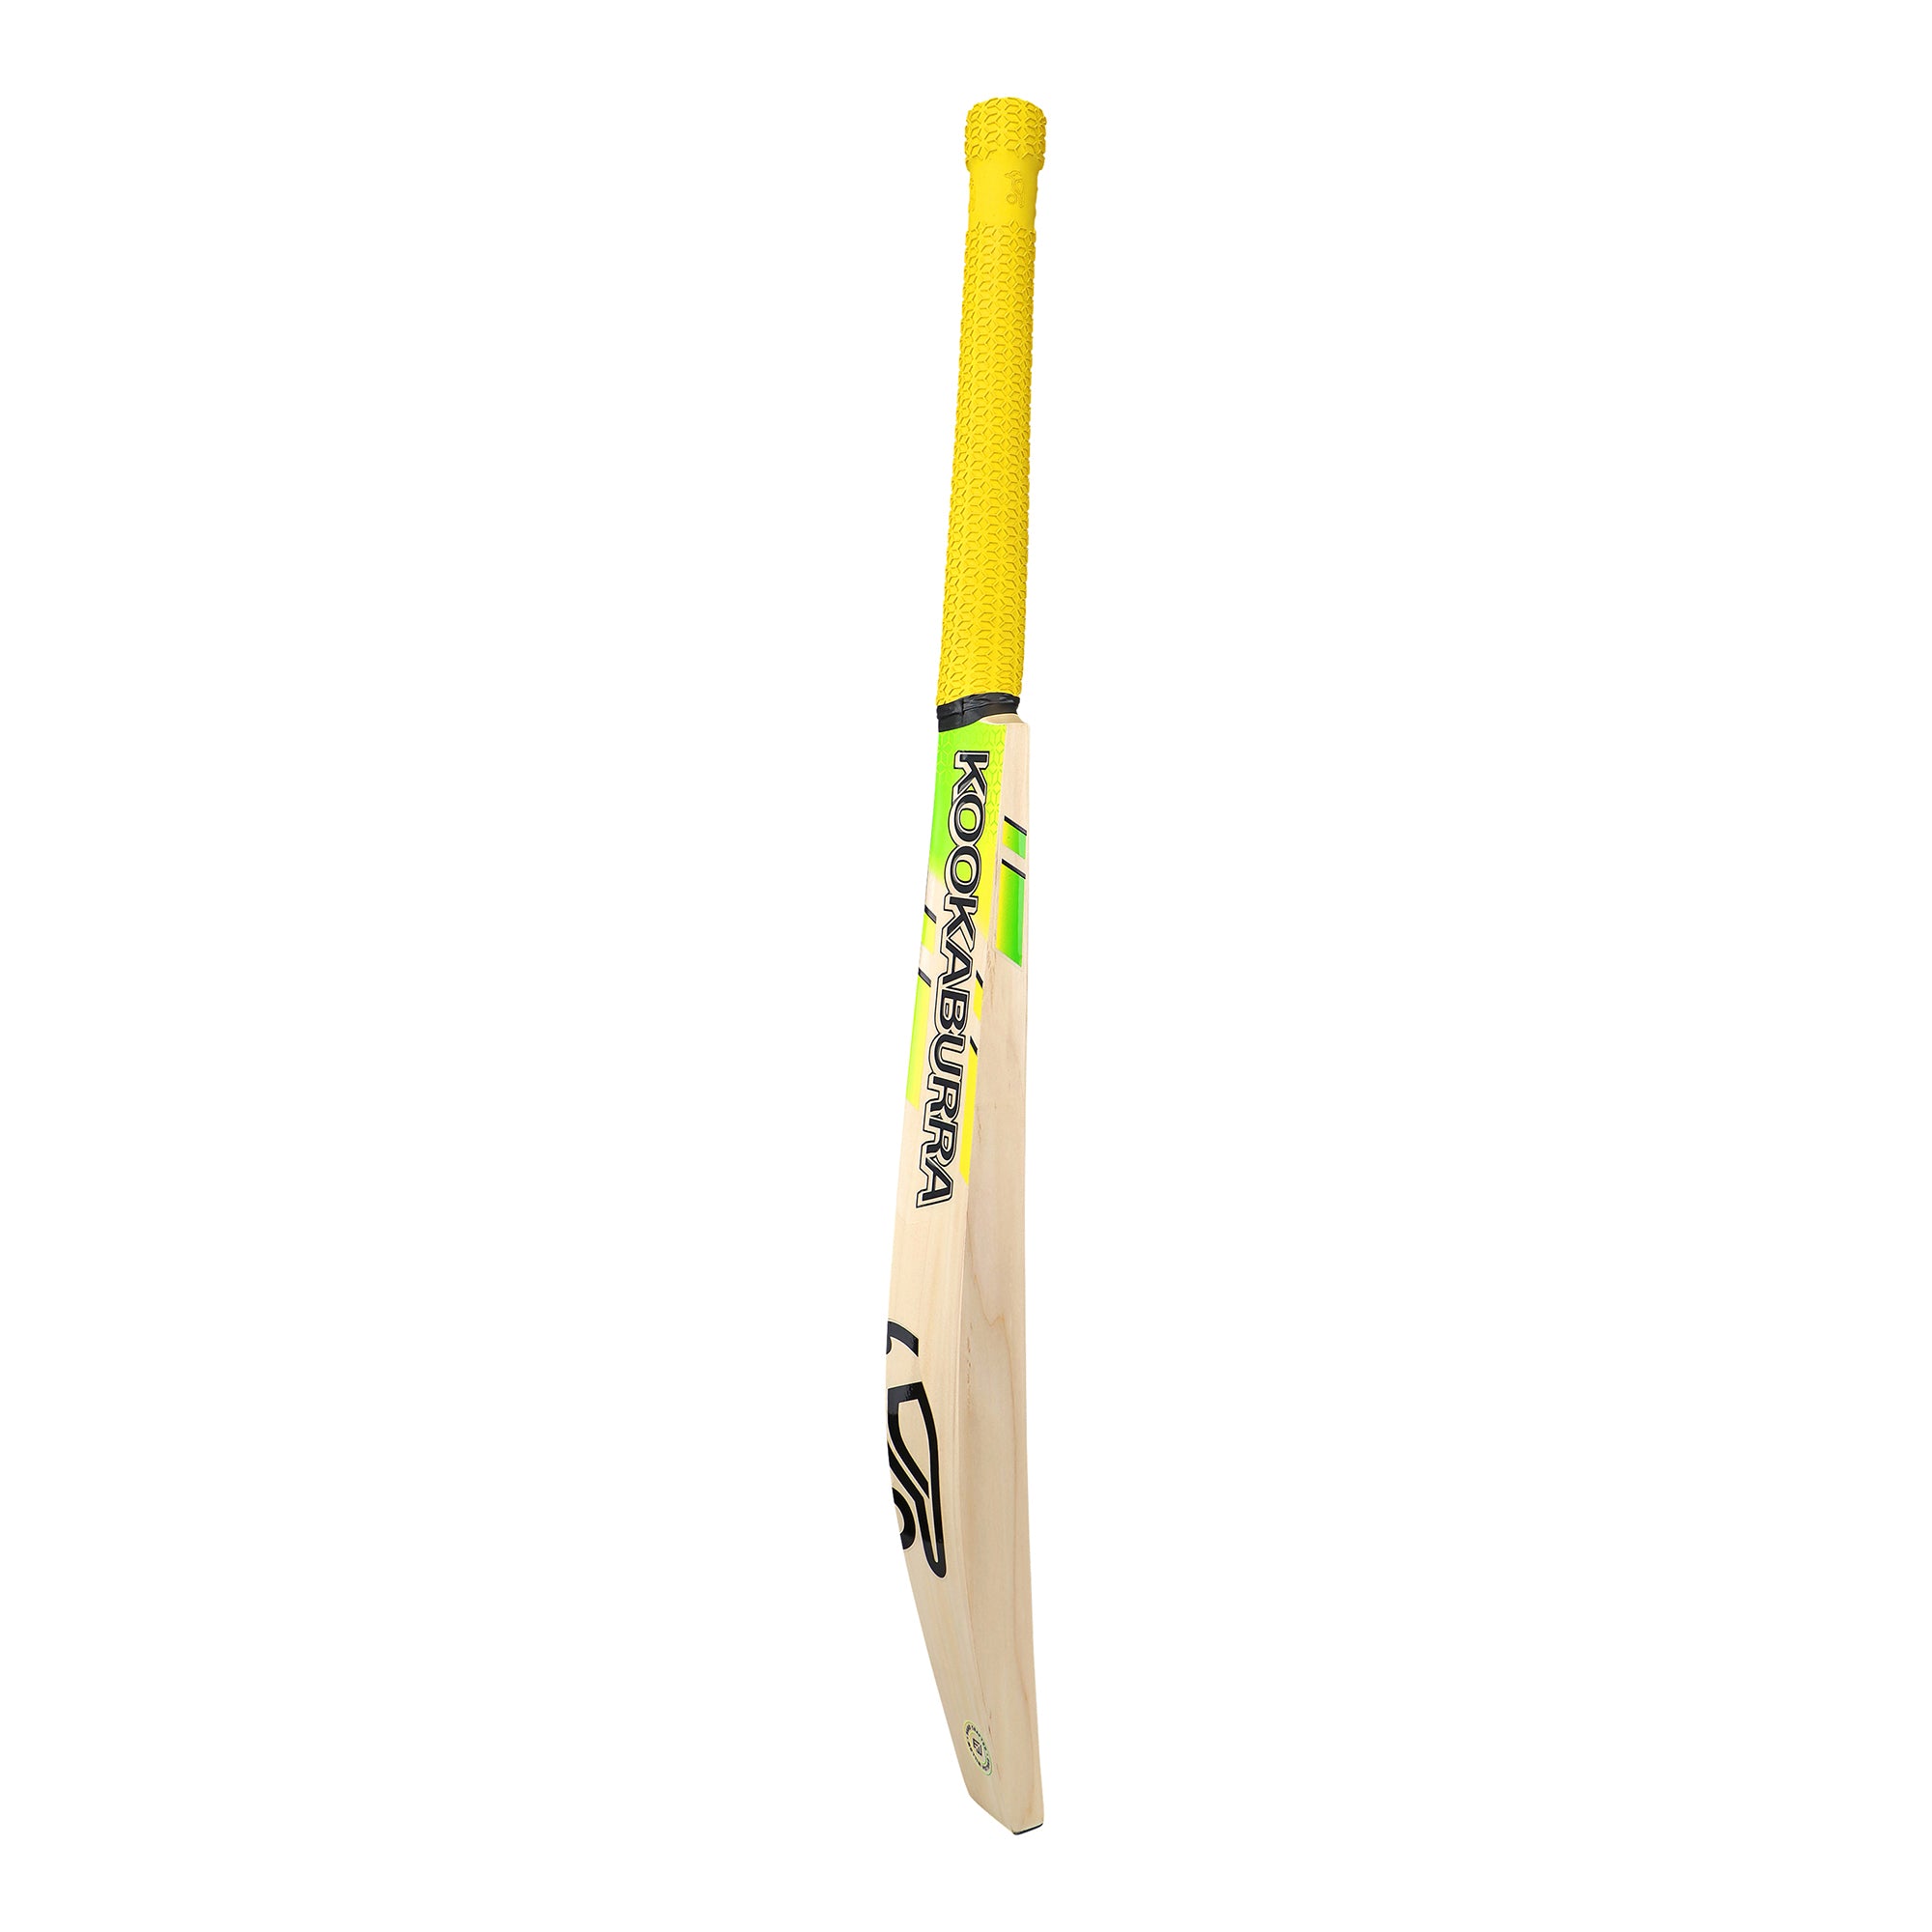 Kookaburra Kahuna Pro 1.0 Cricket Bat - Senior